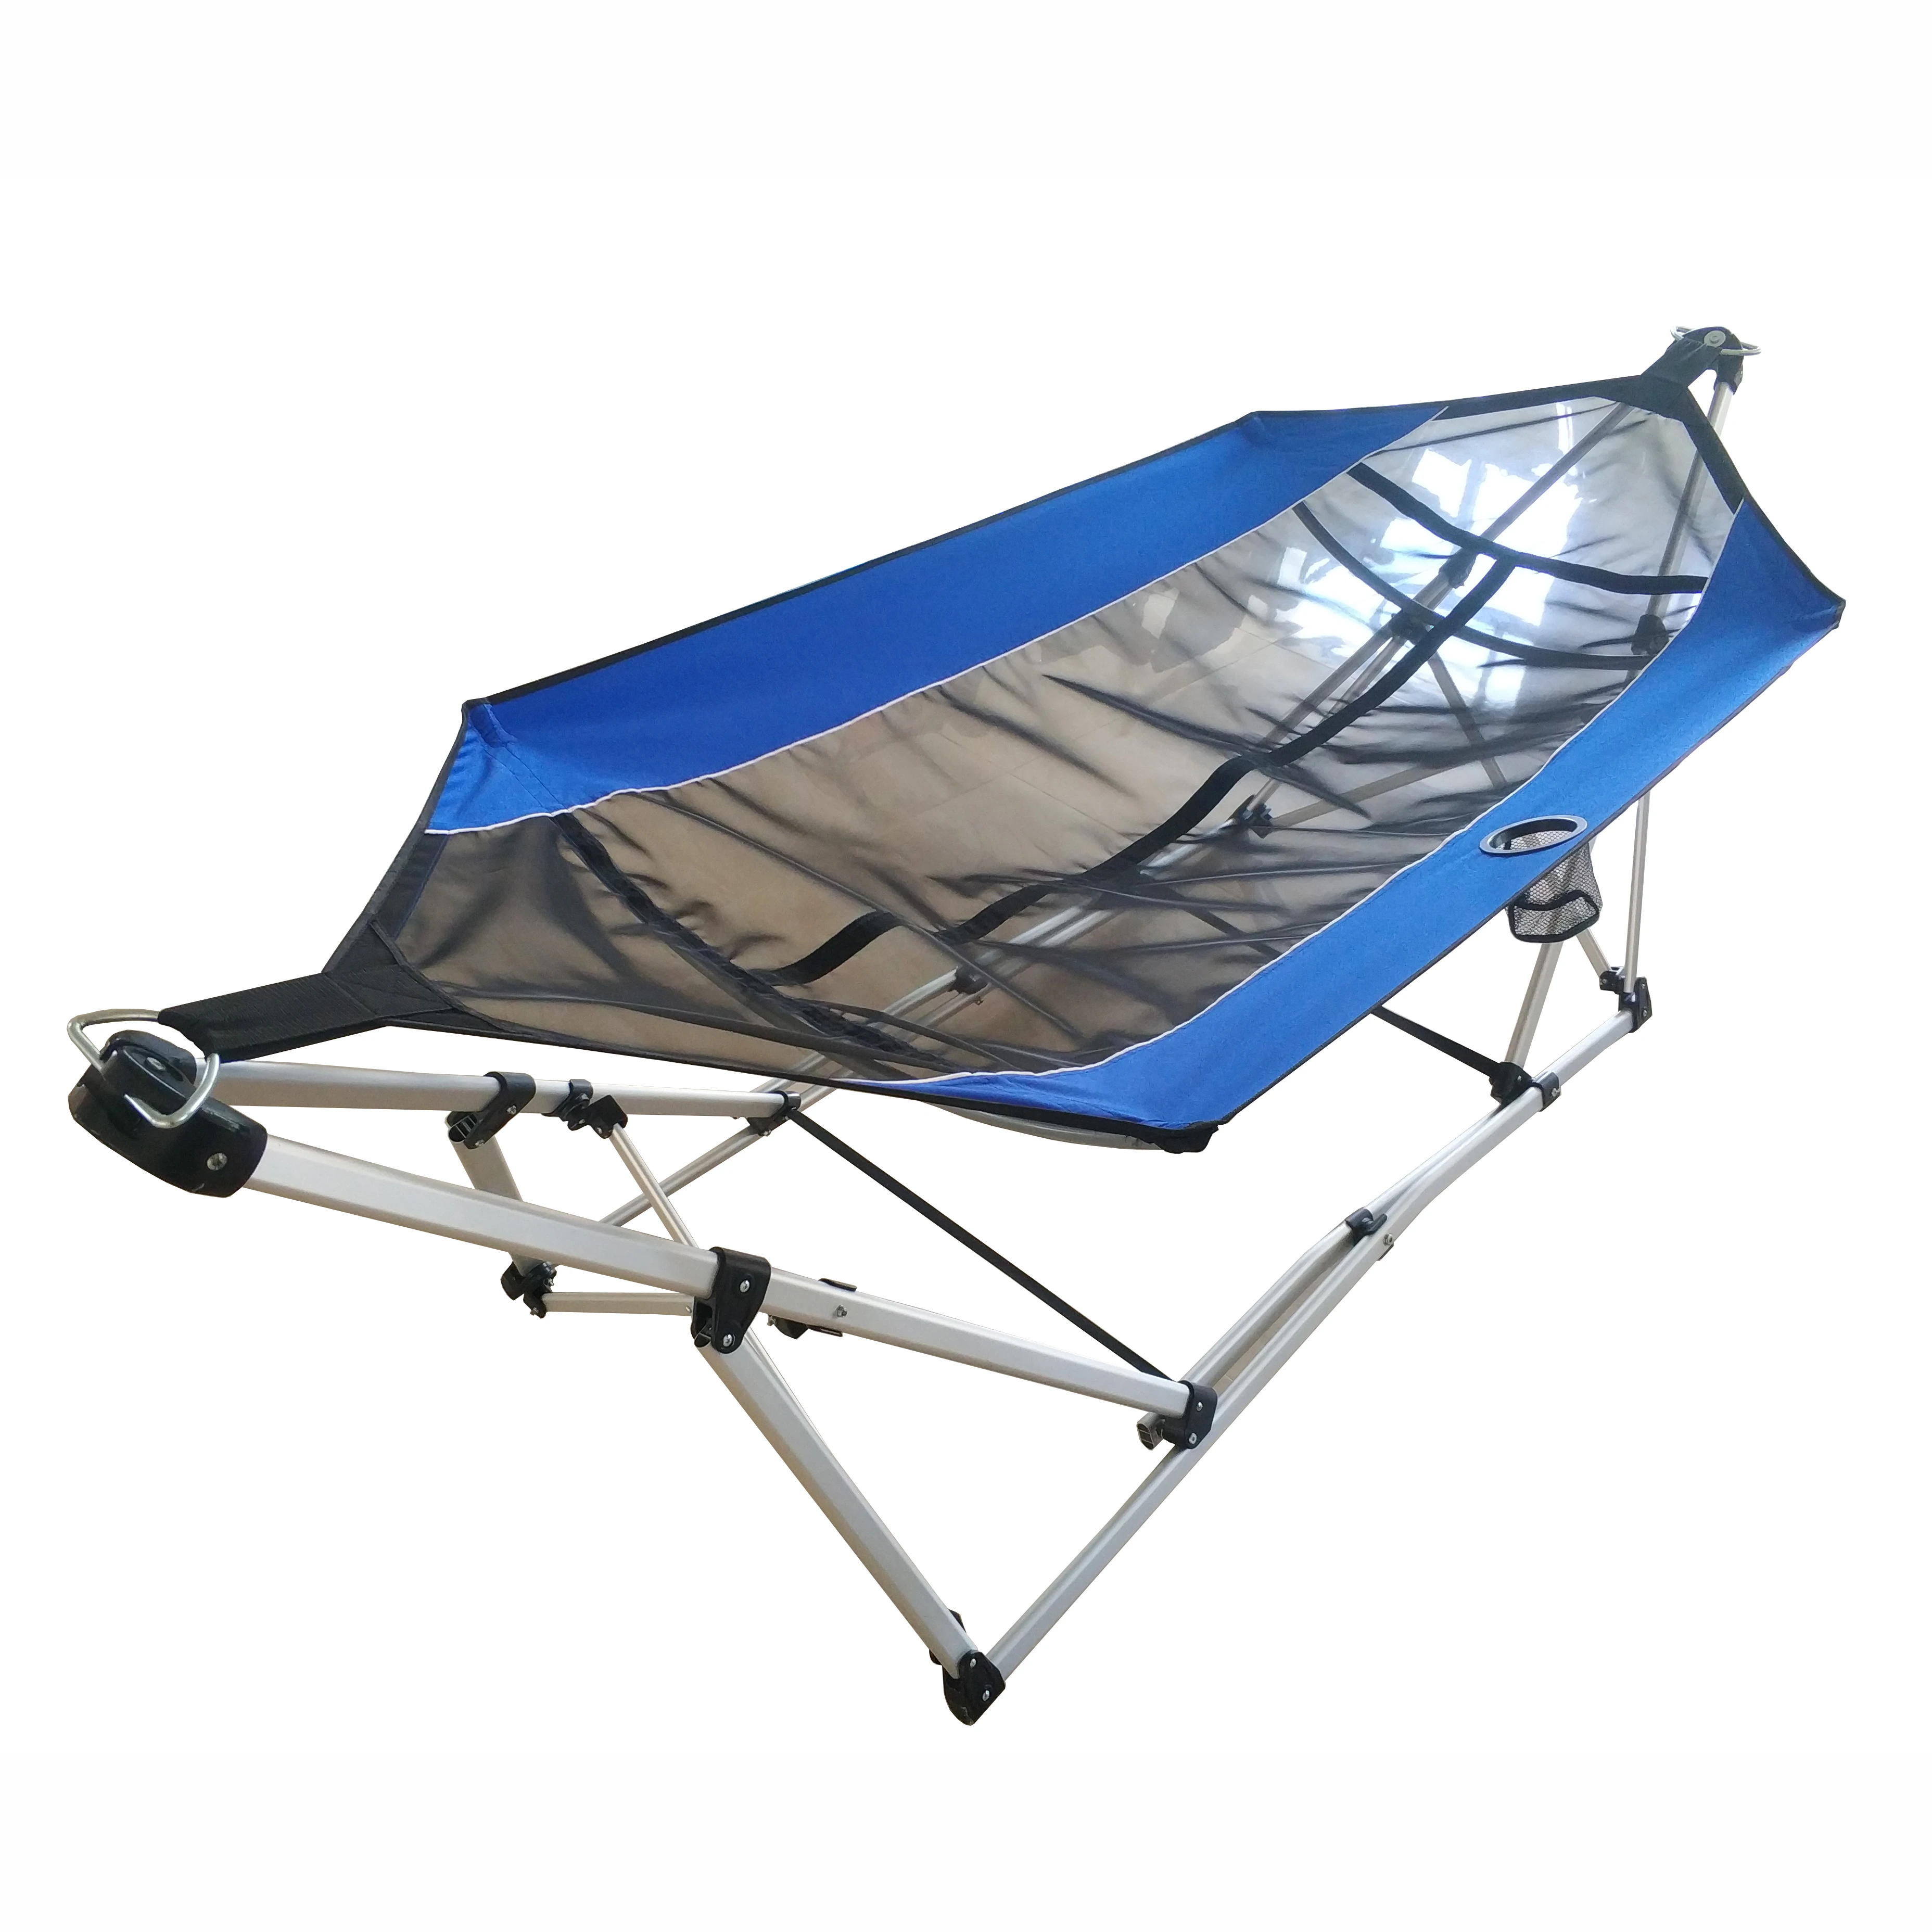 Folding Portable Camping Yard Hammock Bed w/ Aluminum Frame & Carrying Bag 